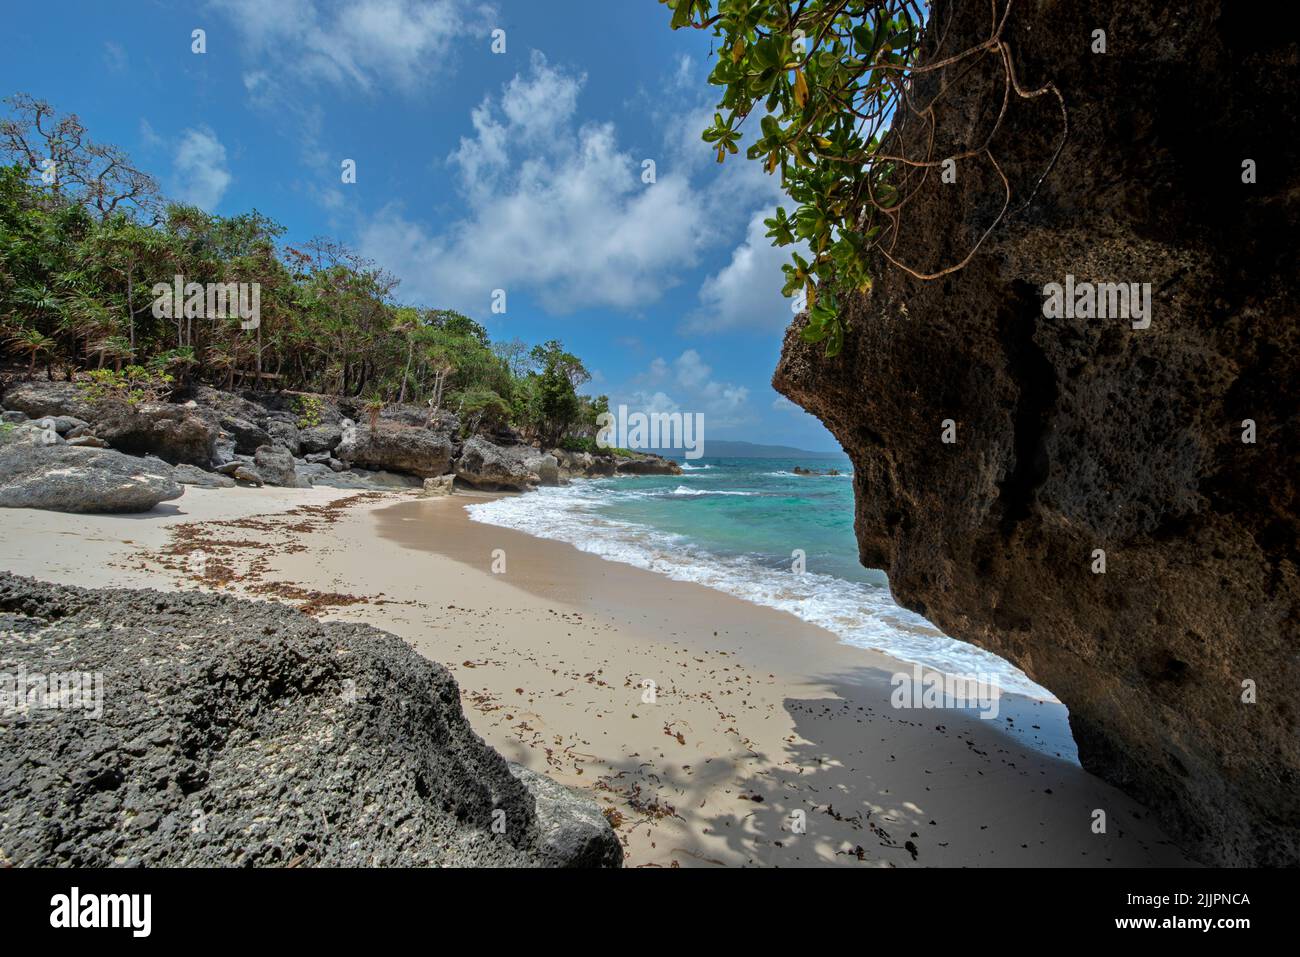 Nirun beach, Elaar, Kei island, Maluku province, Indonesia Stock Photo